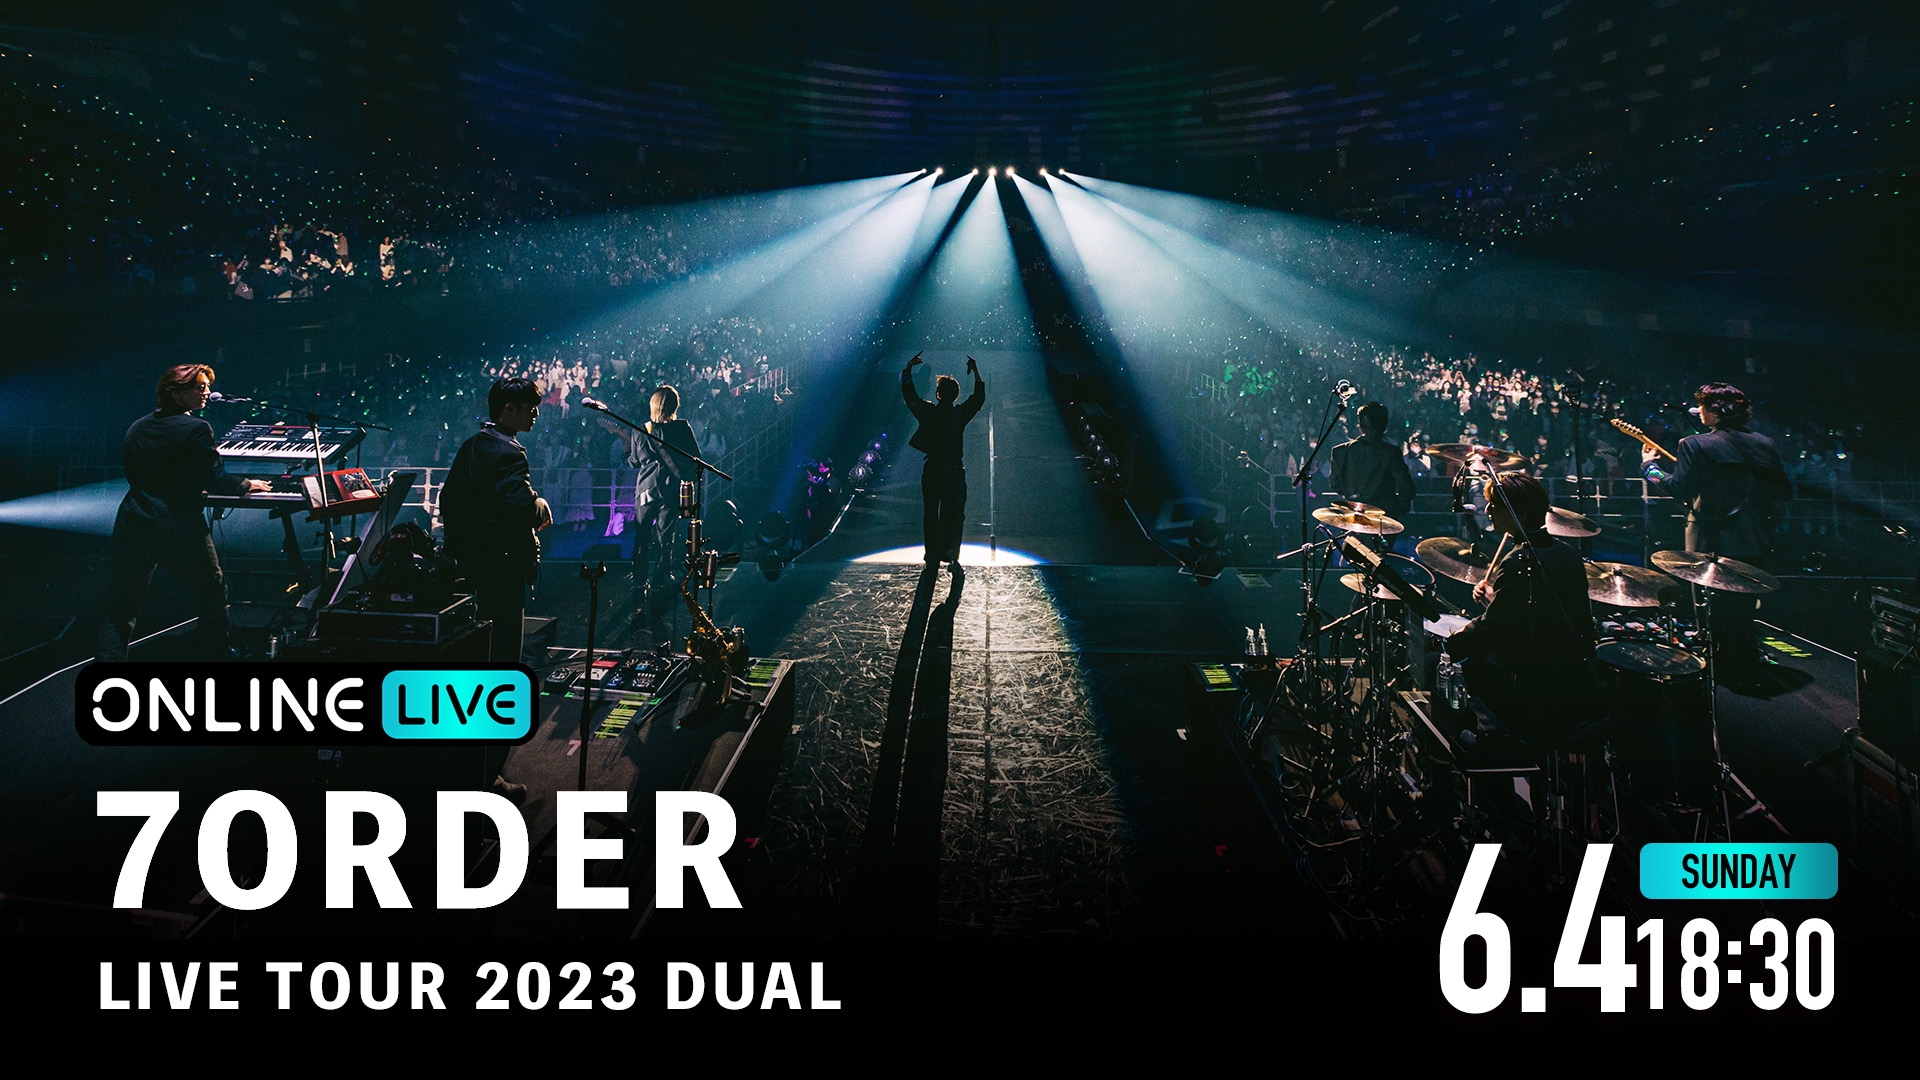 7ORDER LIVE TOUR 2023 DUAL